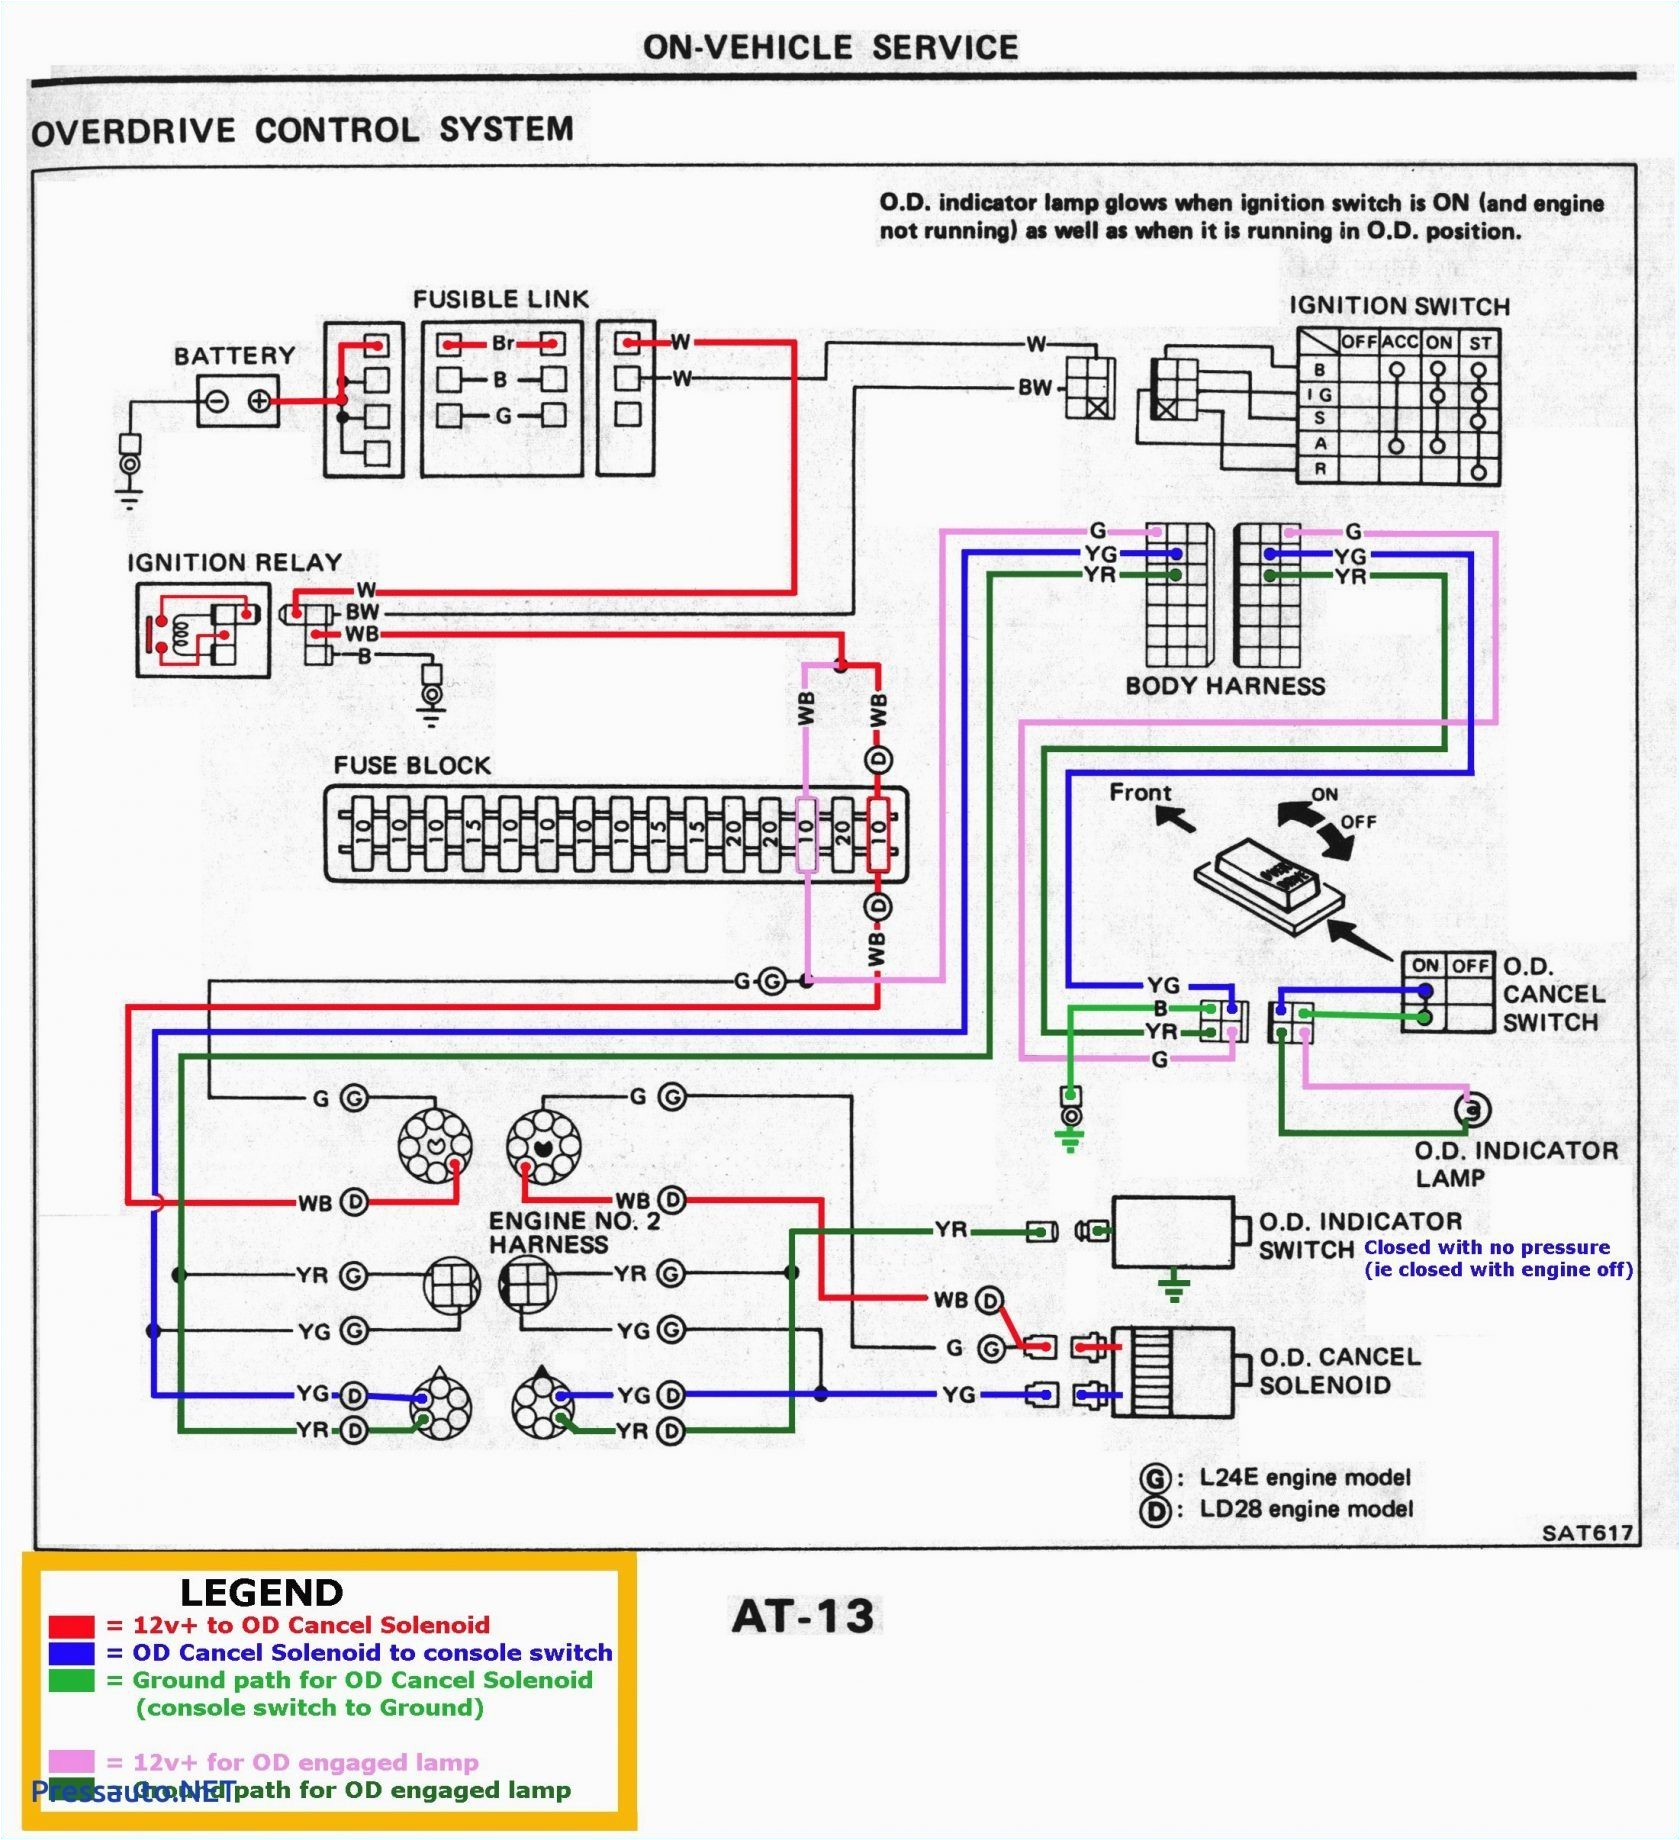 freedom 20 inverter wiring diagram wiring diagram heart interface freedom 20 wiring diagram freedom 20 inverter